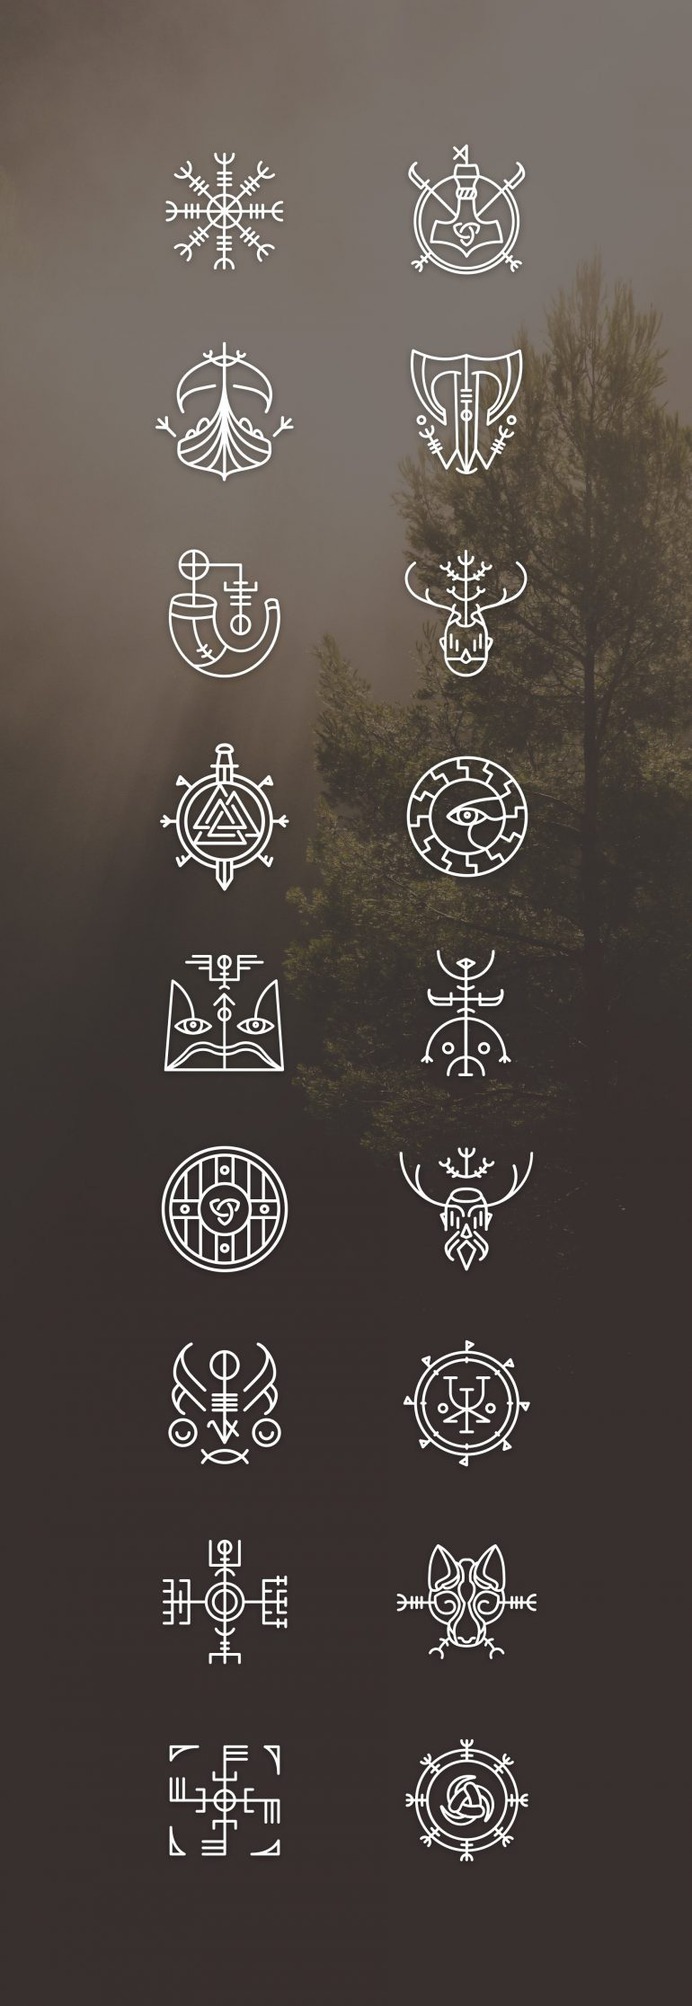 Vikons: the Striking Viking icon set